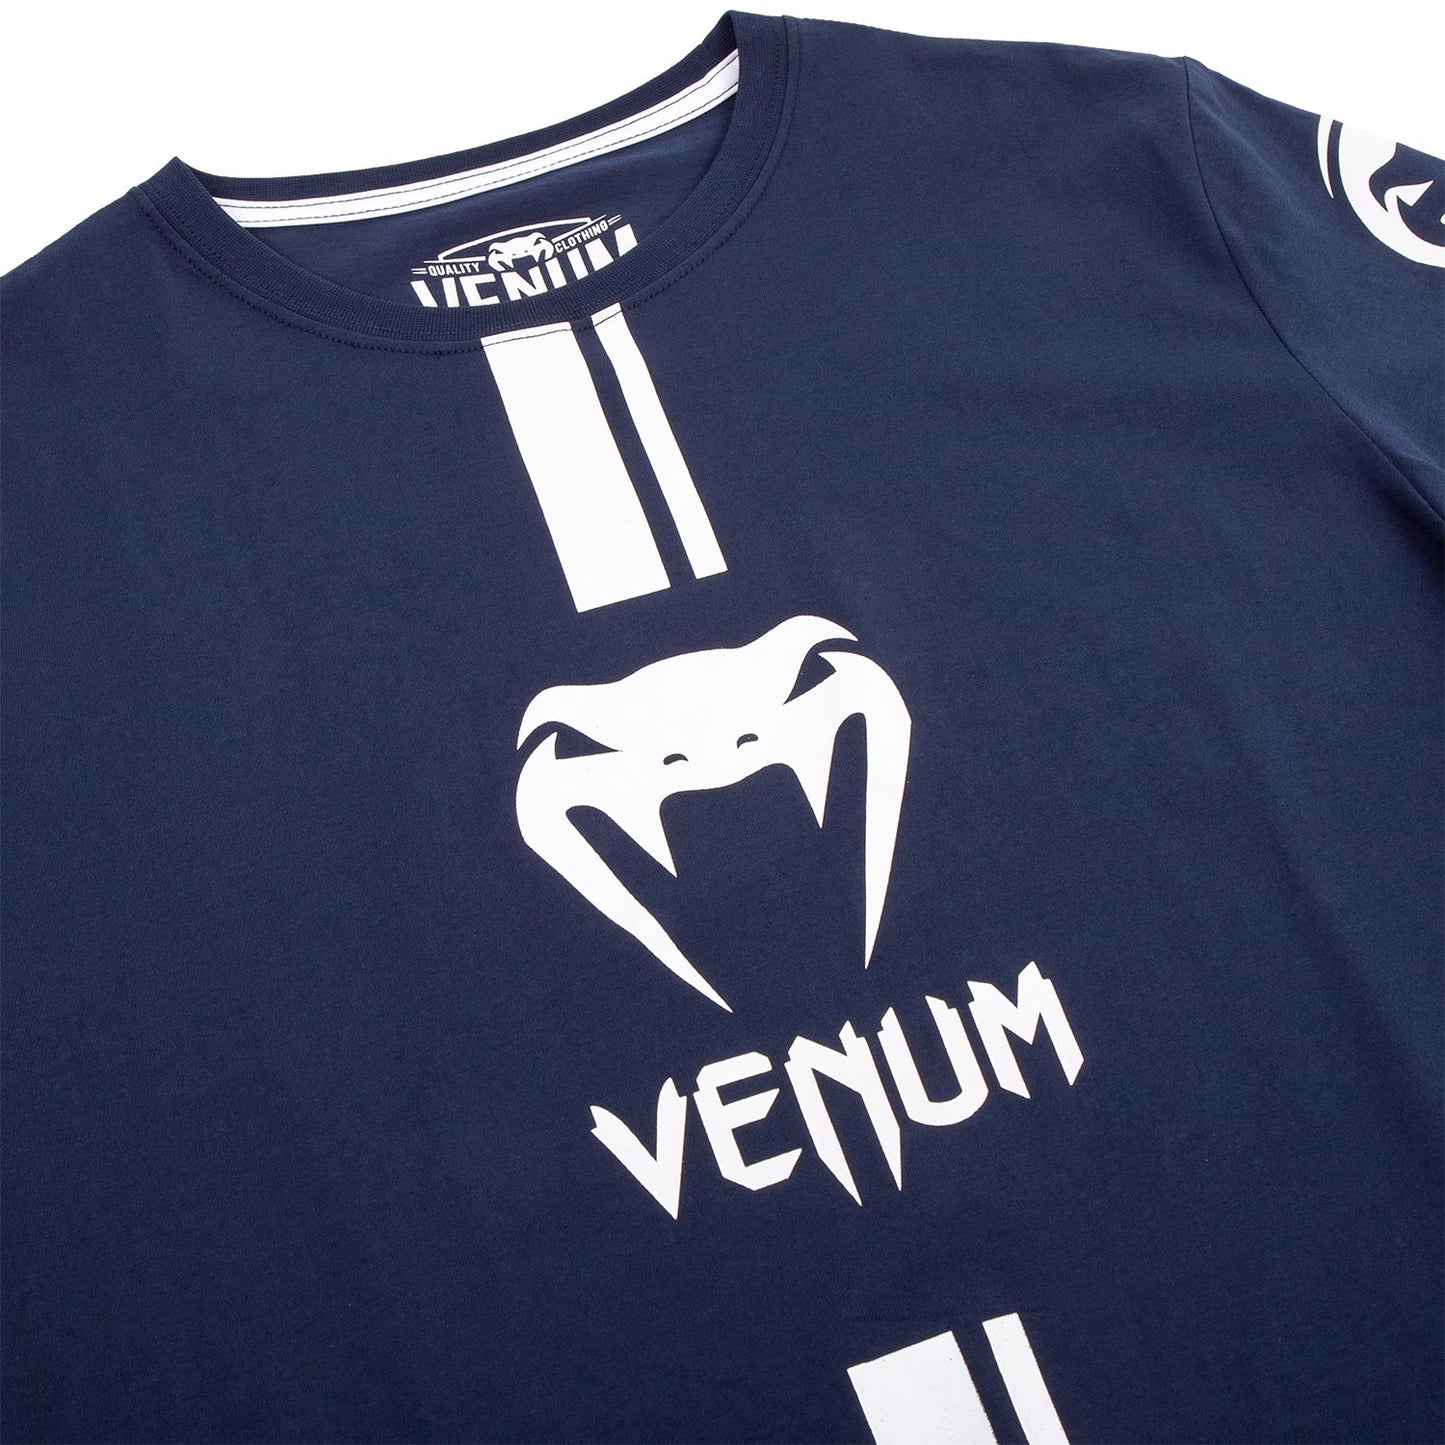 Venum Logos T-shirt - Navy Blue/White